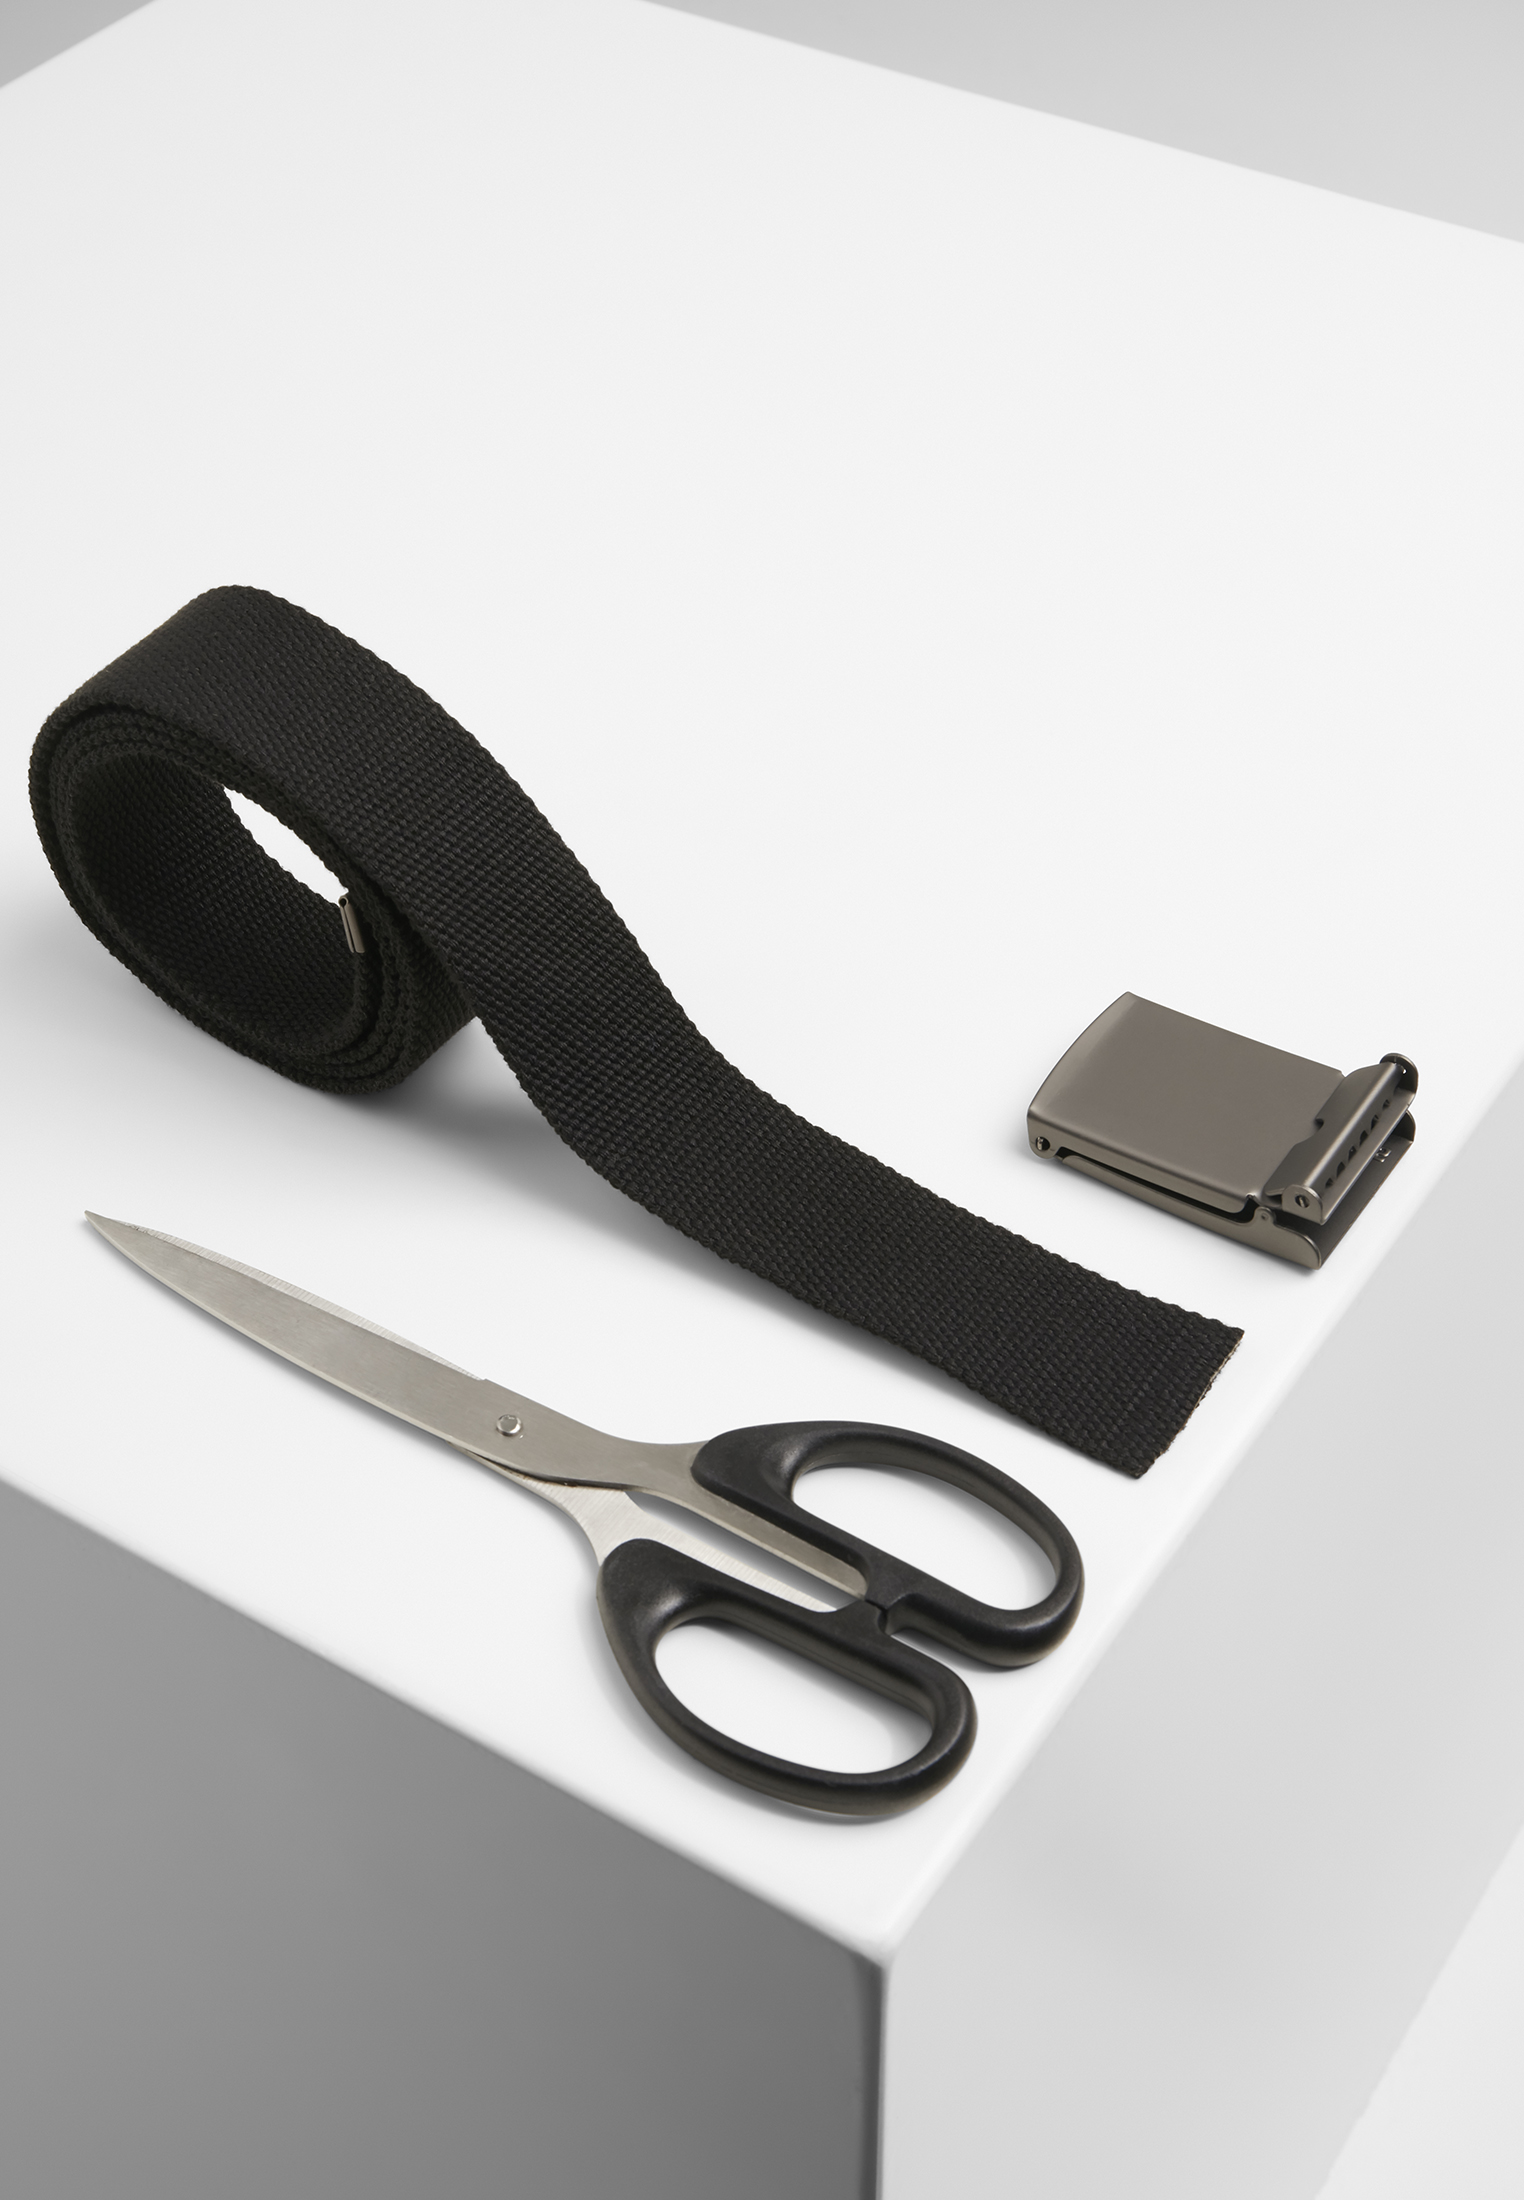 G?rtel Canvas Belts in Farbe black